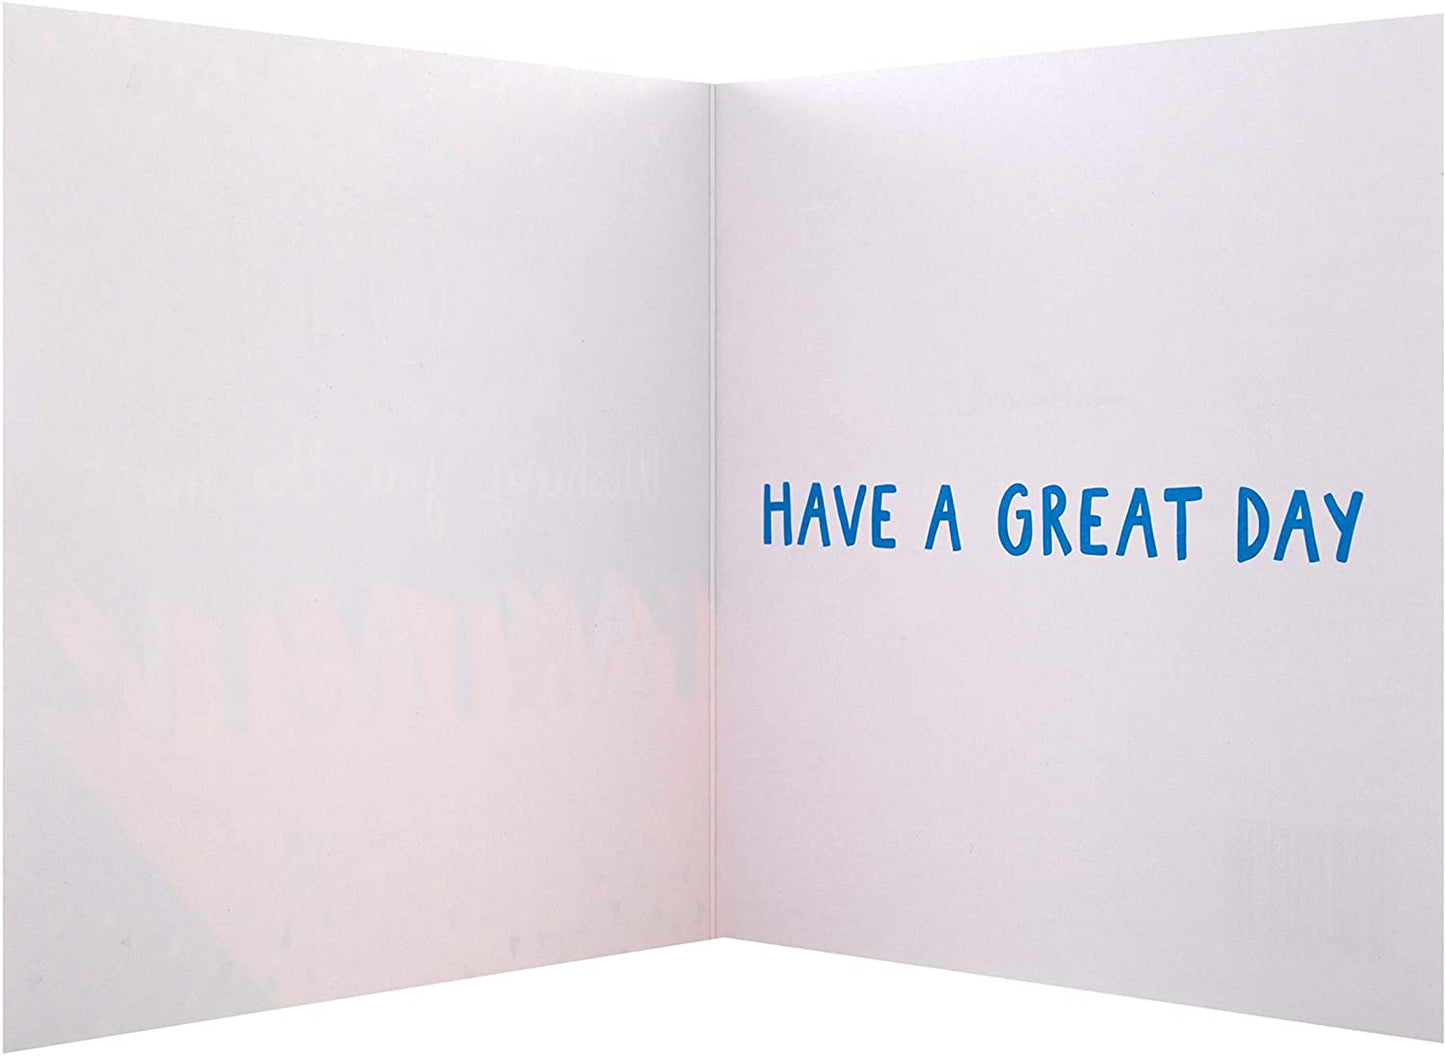 Son Birthday Card Contemporary Text Based Design 